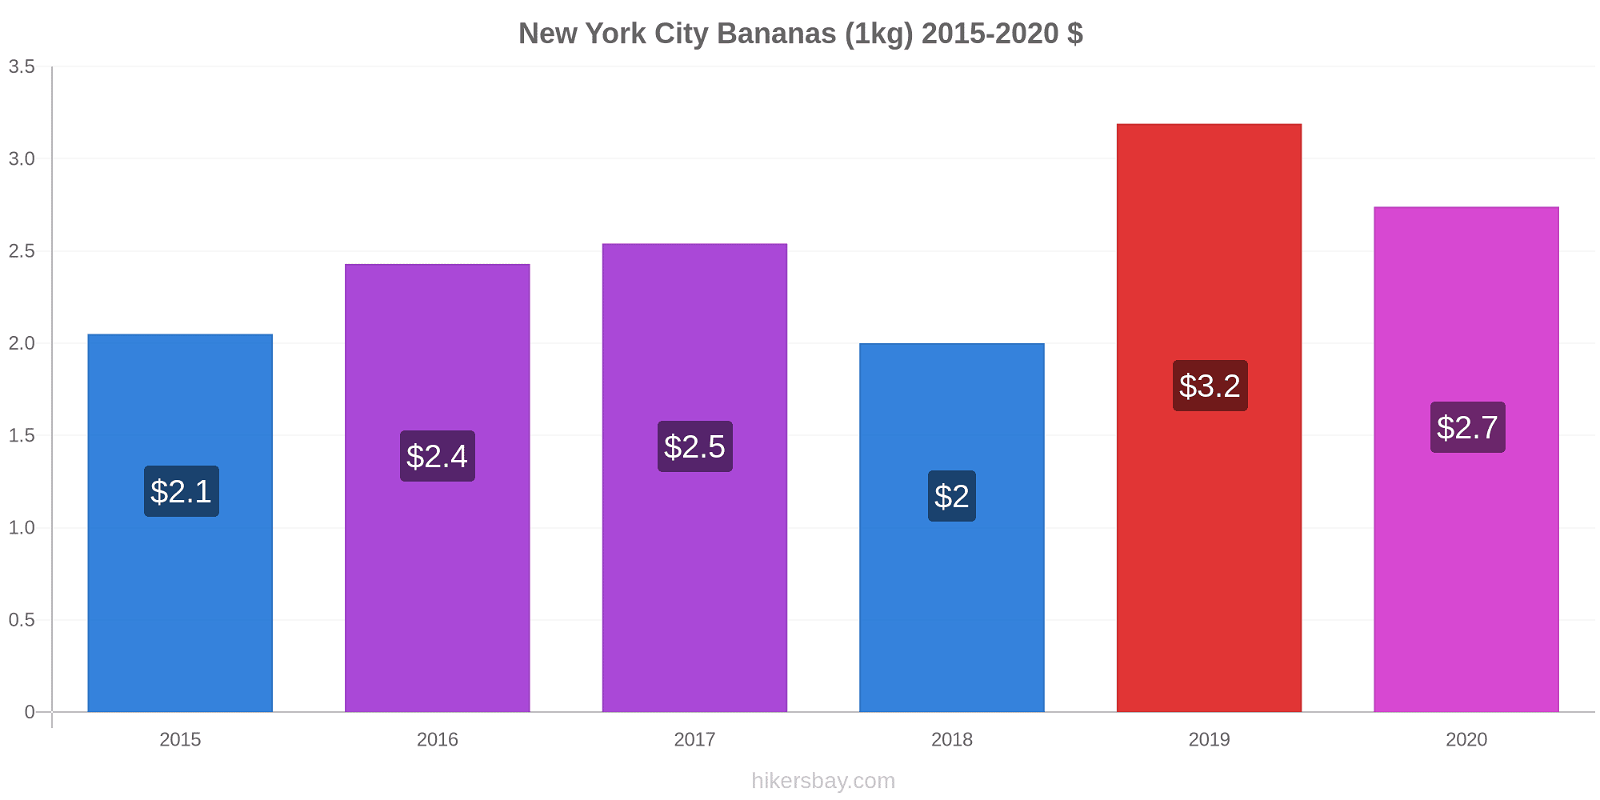 New York City price changes Bananas (1kg) hikersbay.com